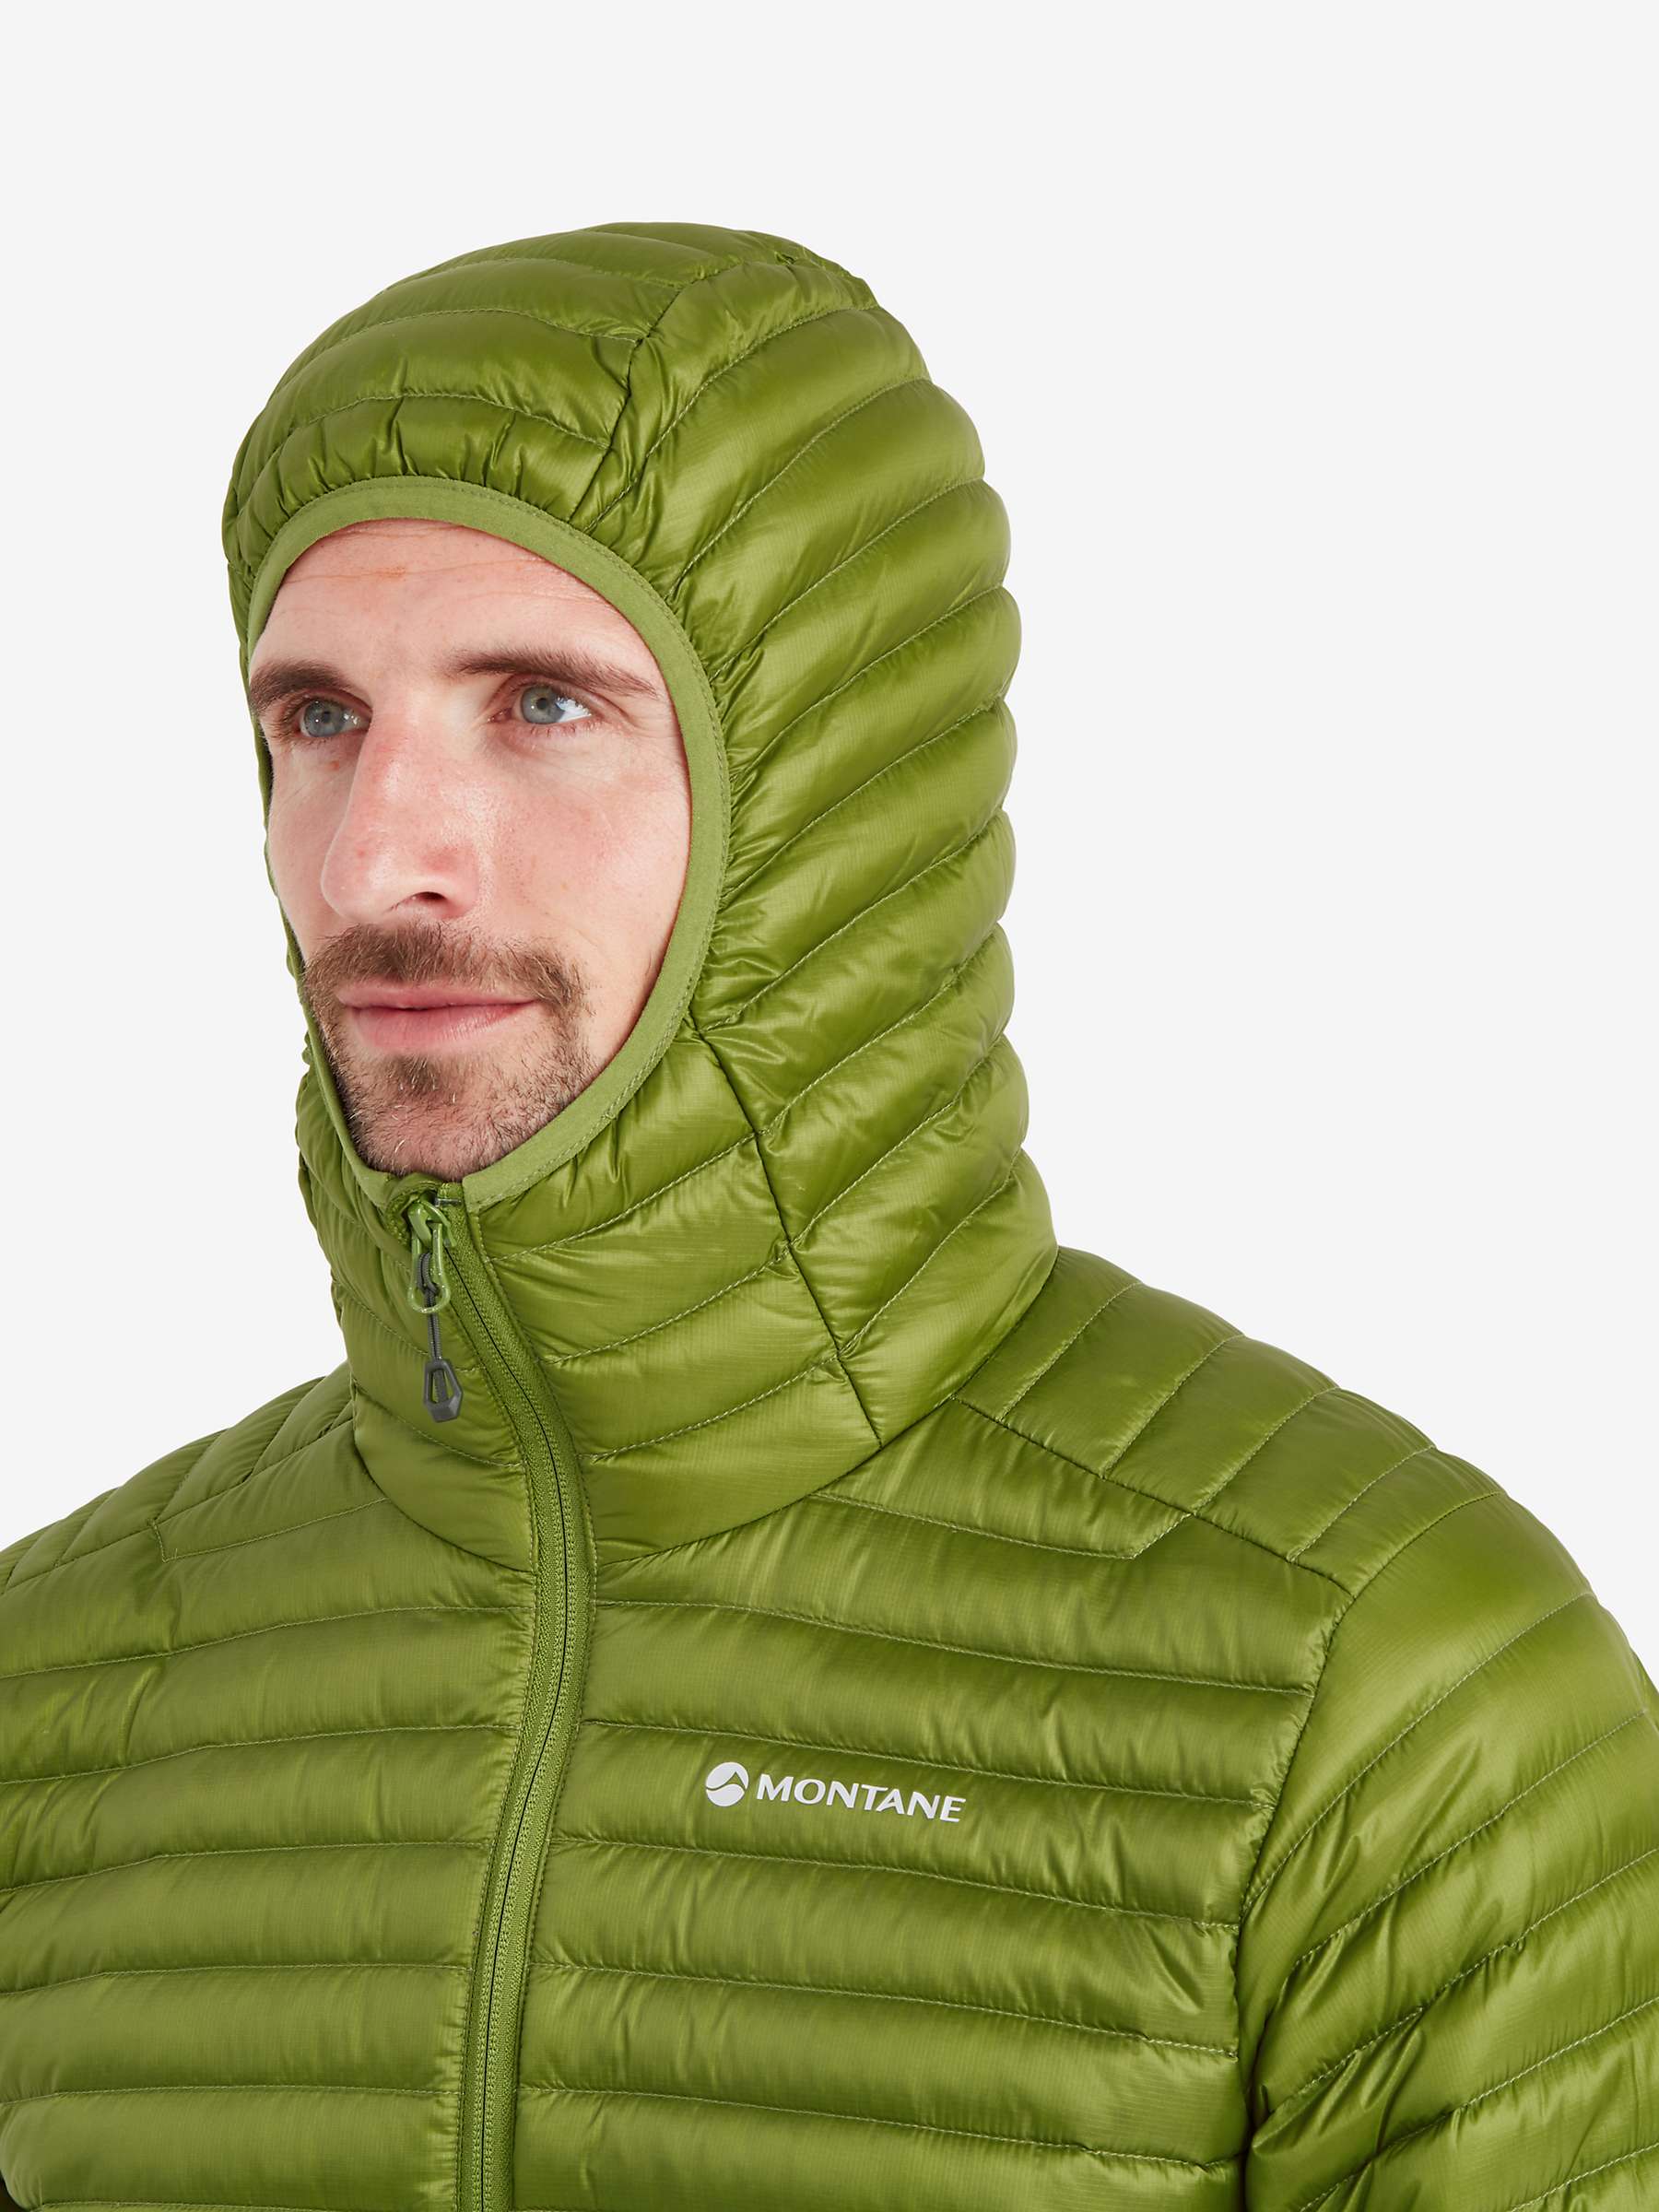 Buy Montane Anti-Freeze Lite Hooded Packable Down Jacket Online at johnlewis.com